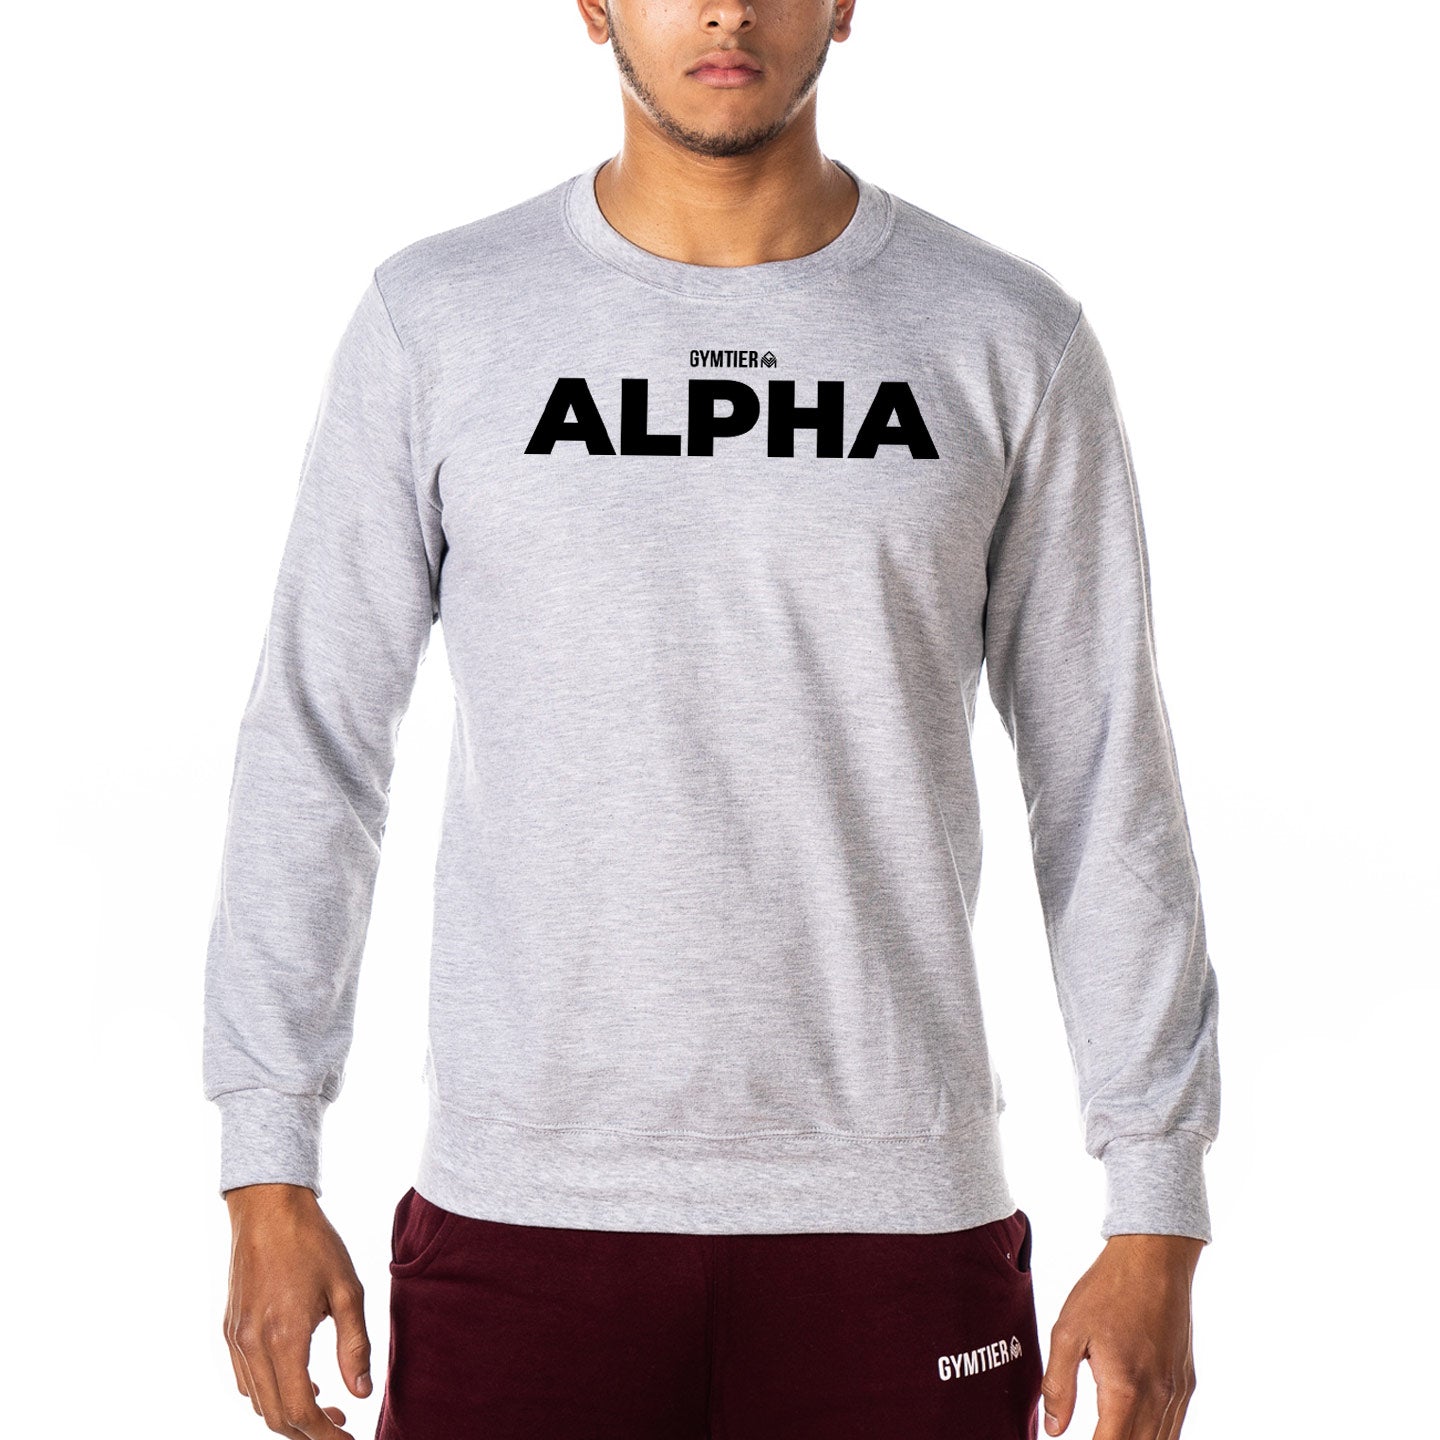 GYMTIER ALPHA - Gym Sweatshirt